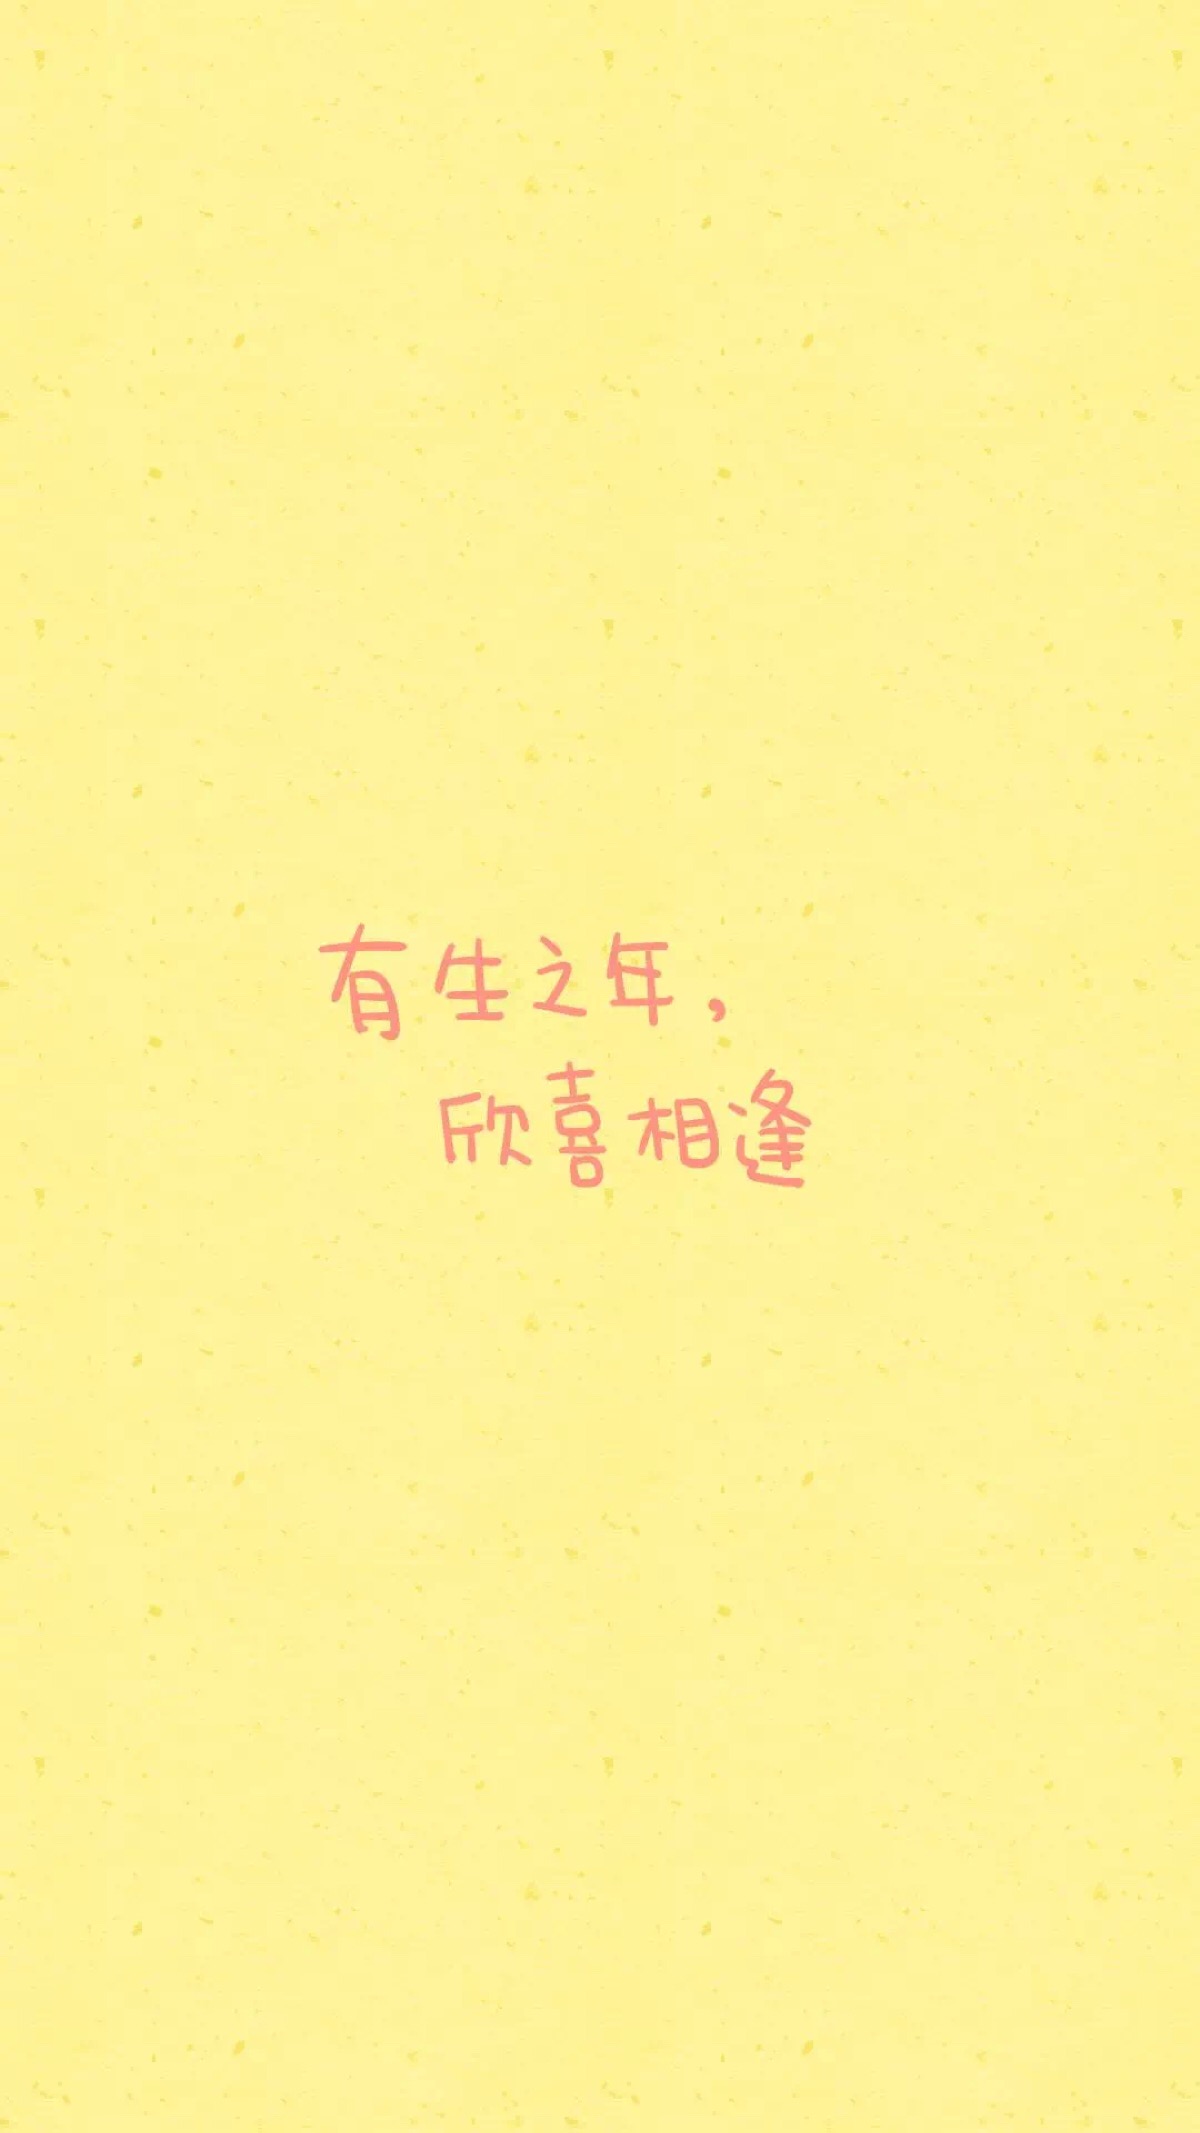 from晚安荼蘼 手写句子 文字壁纸 锁屏 情话